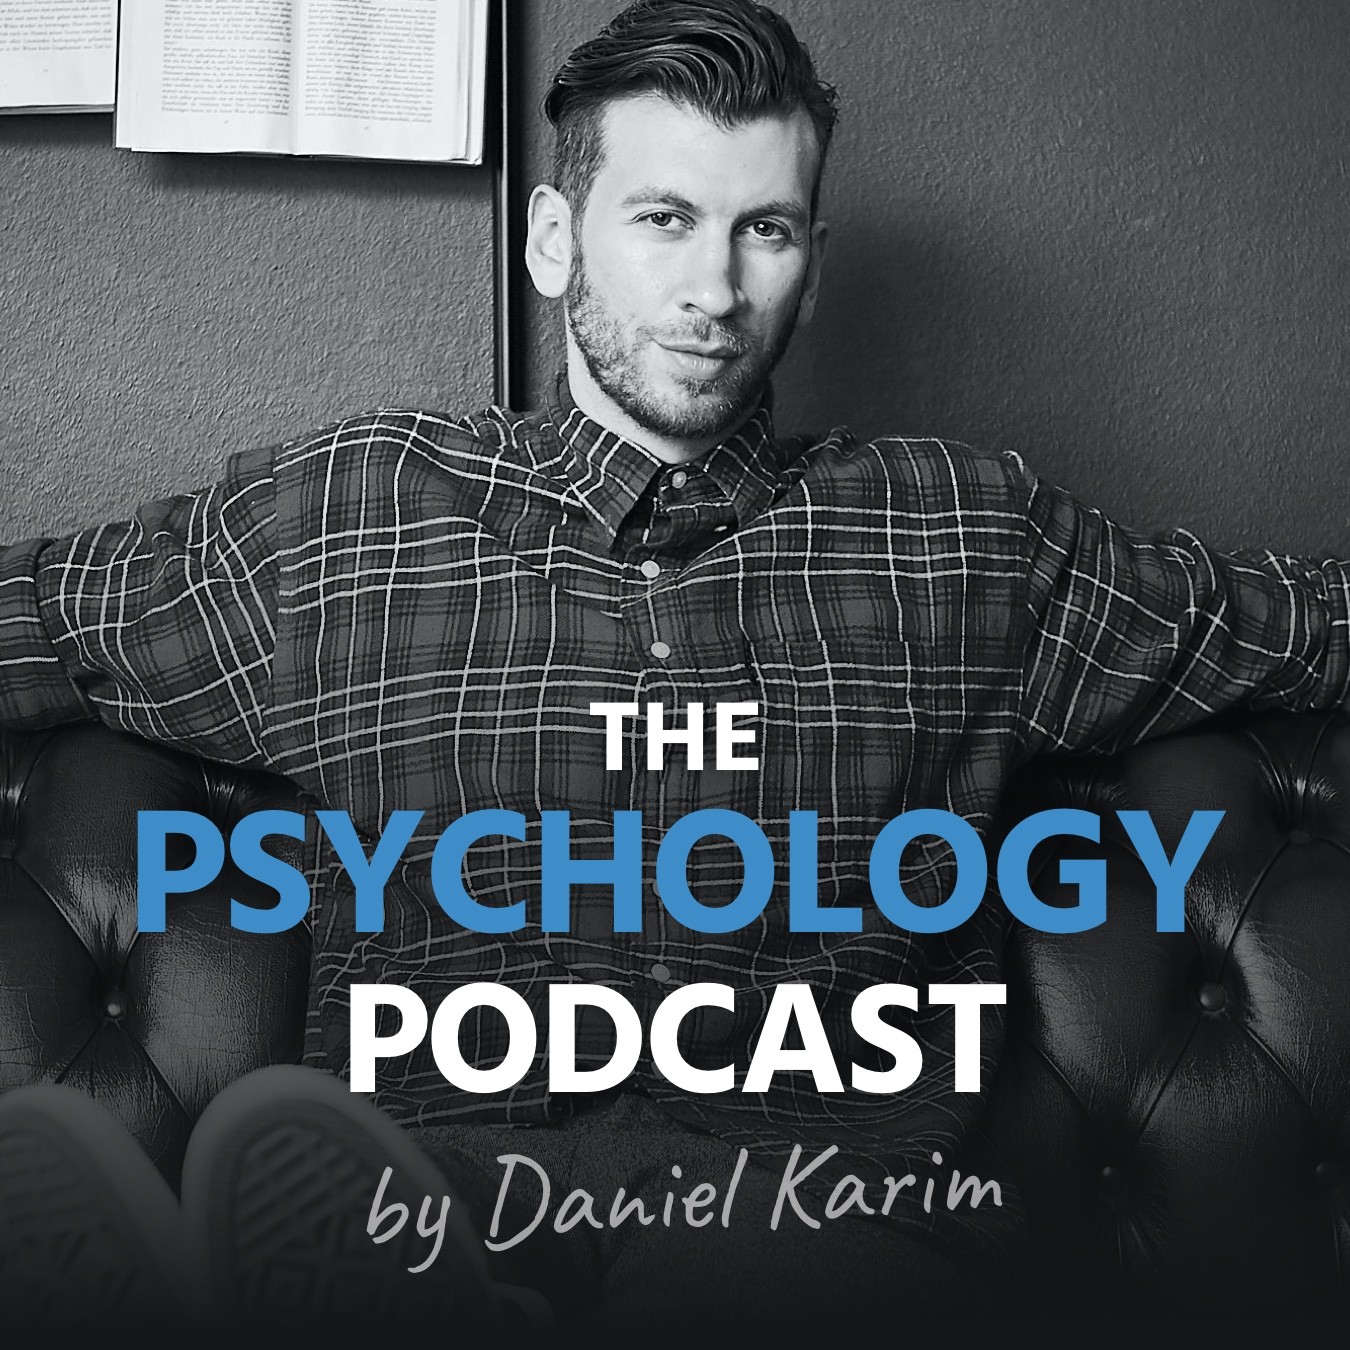 The Psychology Podcast by Daniel Karim